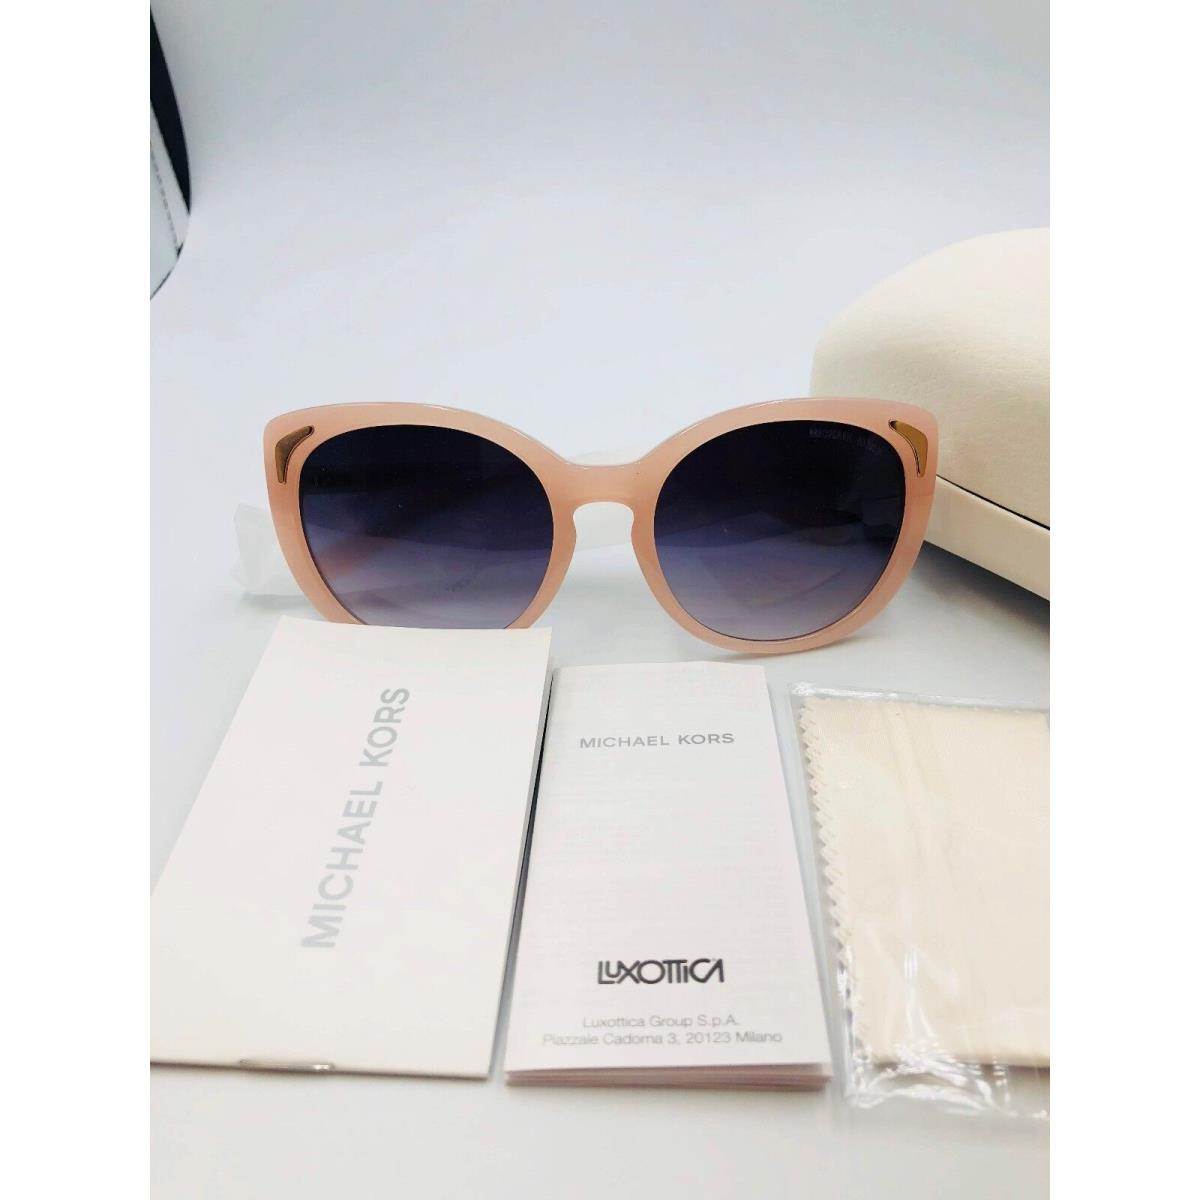 Michael Kors sunglasses  - Pink , Light Pink Frame, Blue tint Lens 8